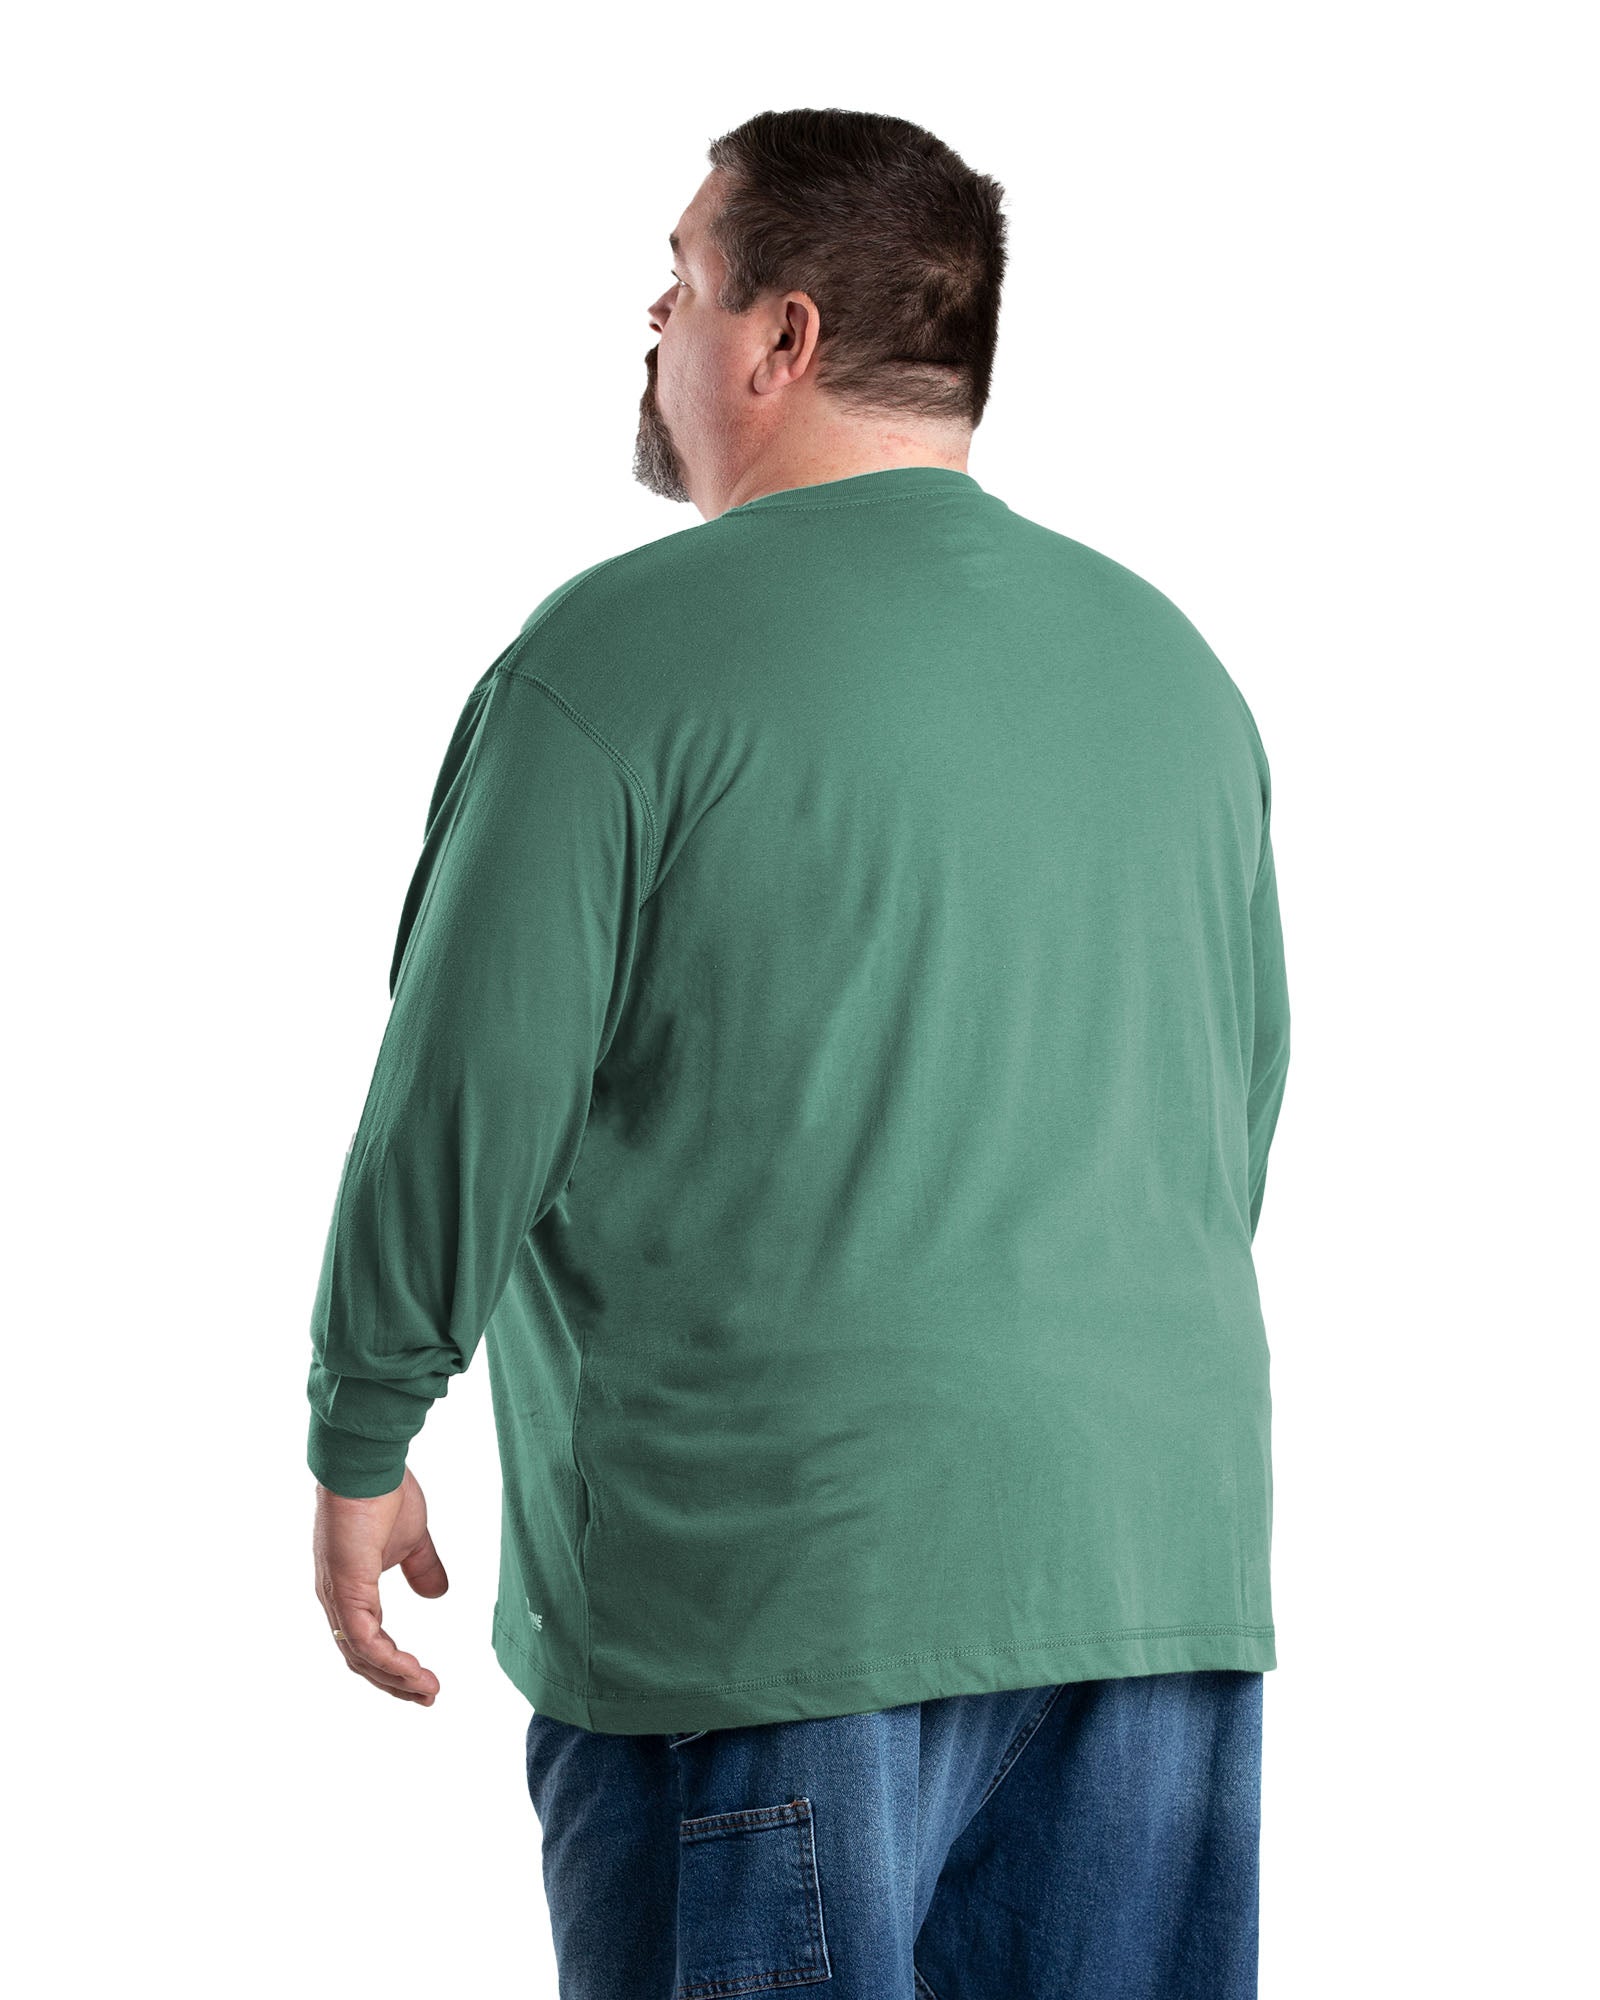 Performance Long Sleeve Pocket T-Shirt